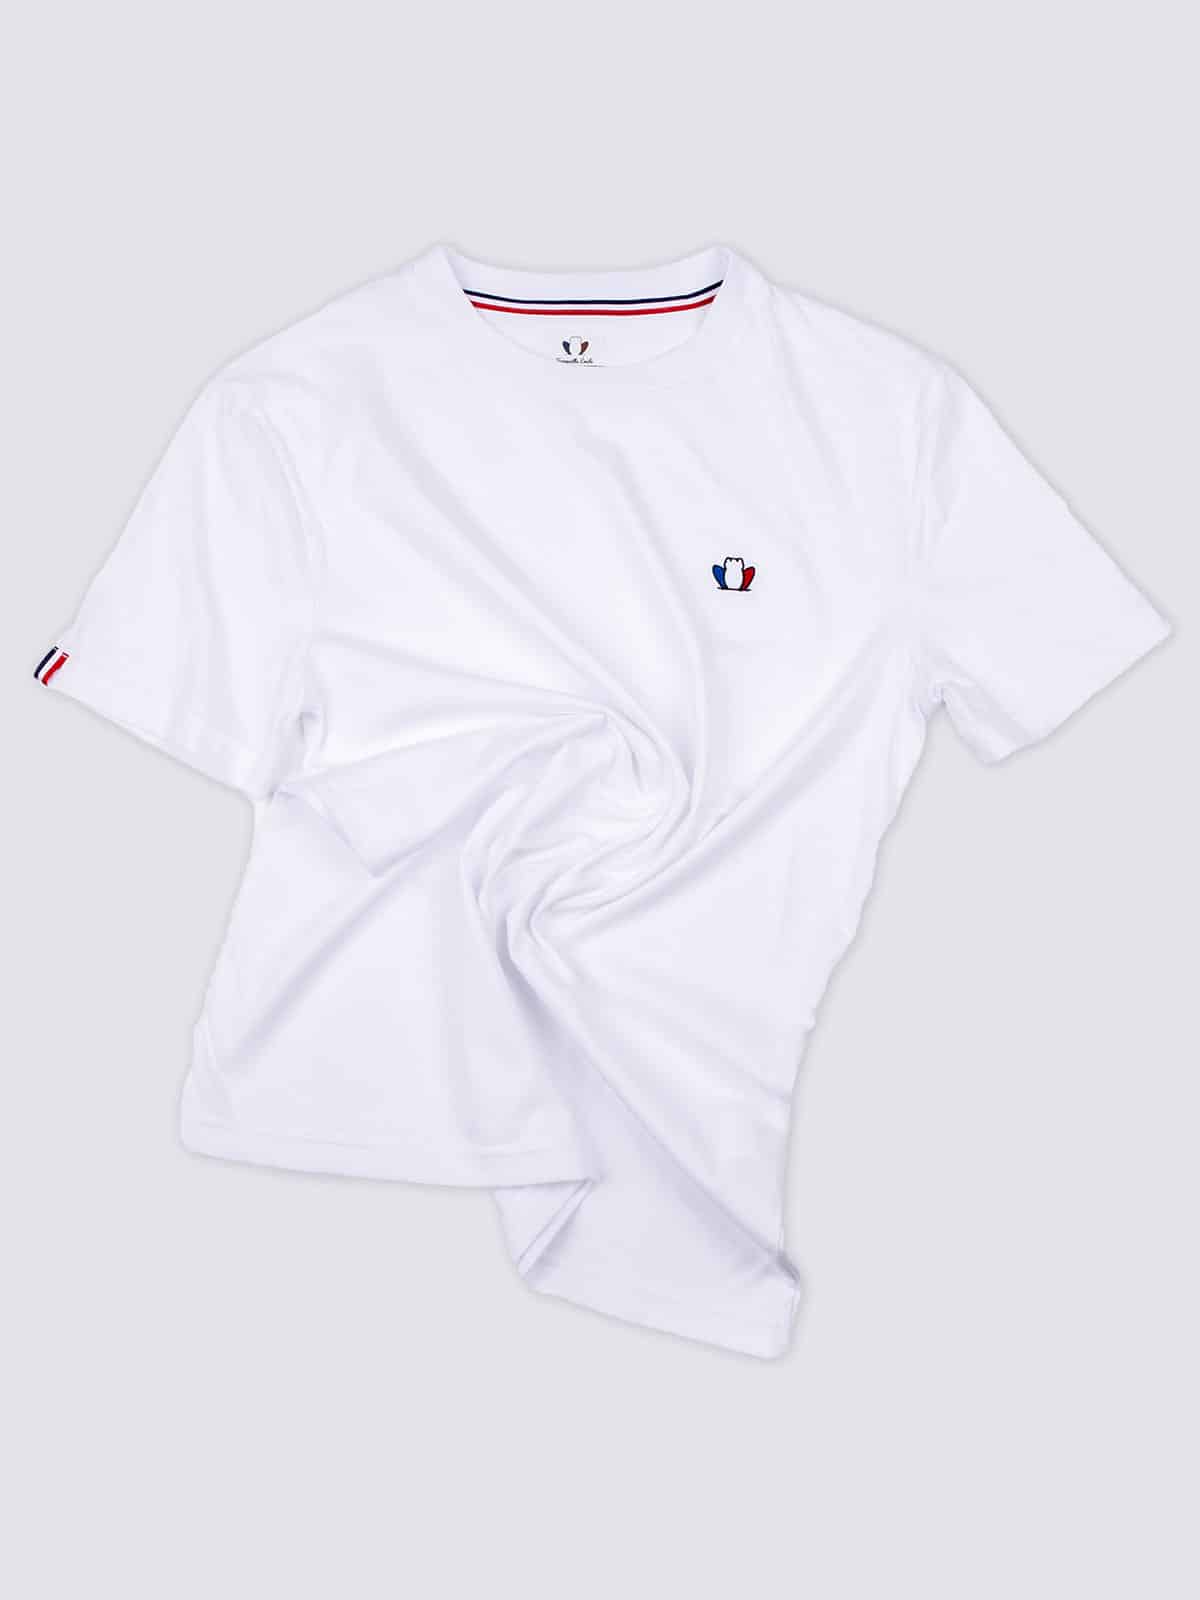 T-Shirt made in France homme noir - L'Authentique 3.0 - Tranquille Emile